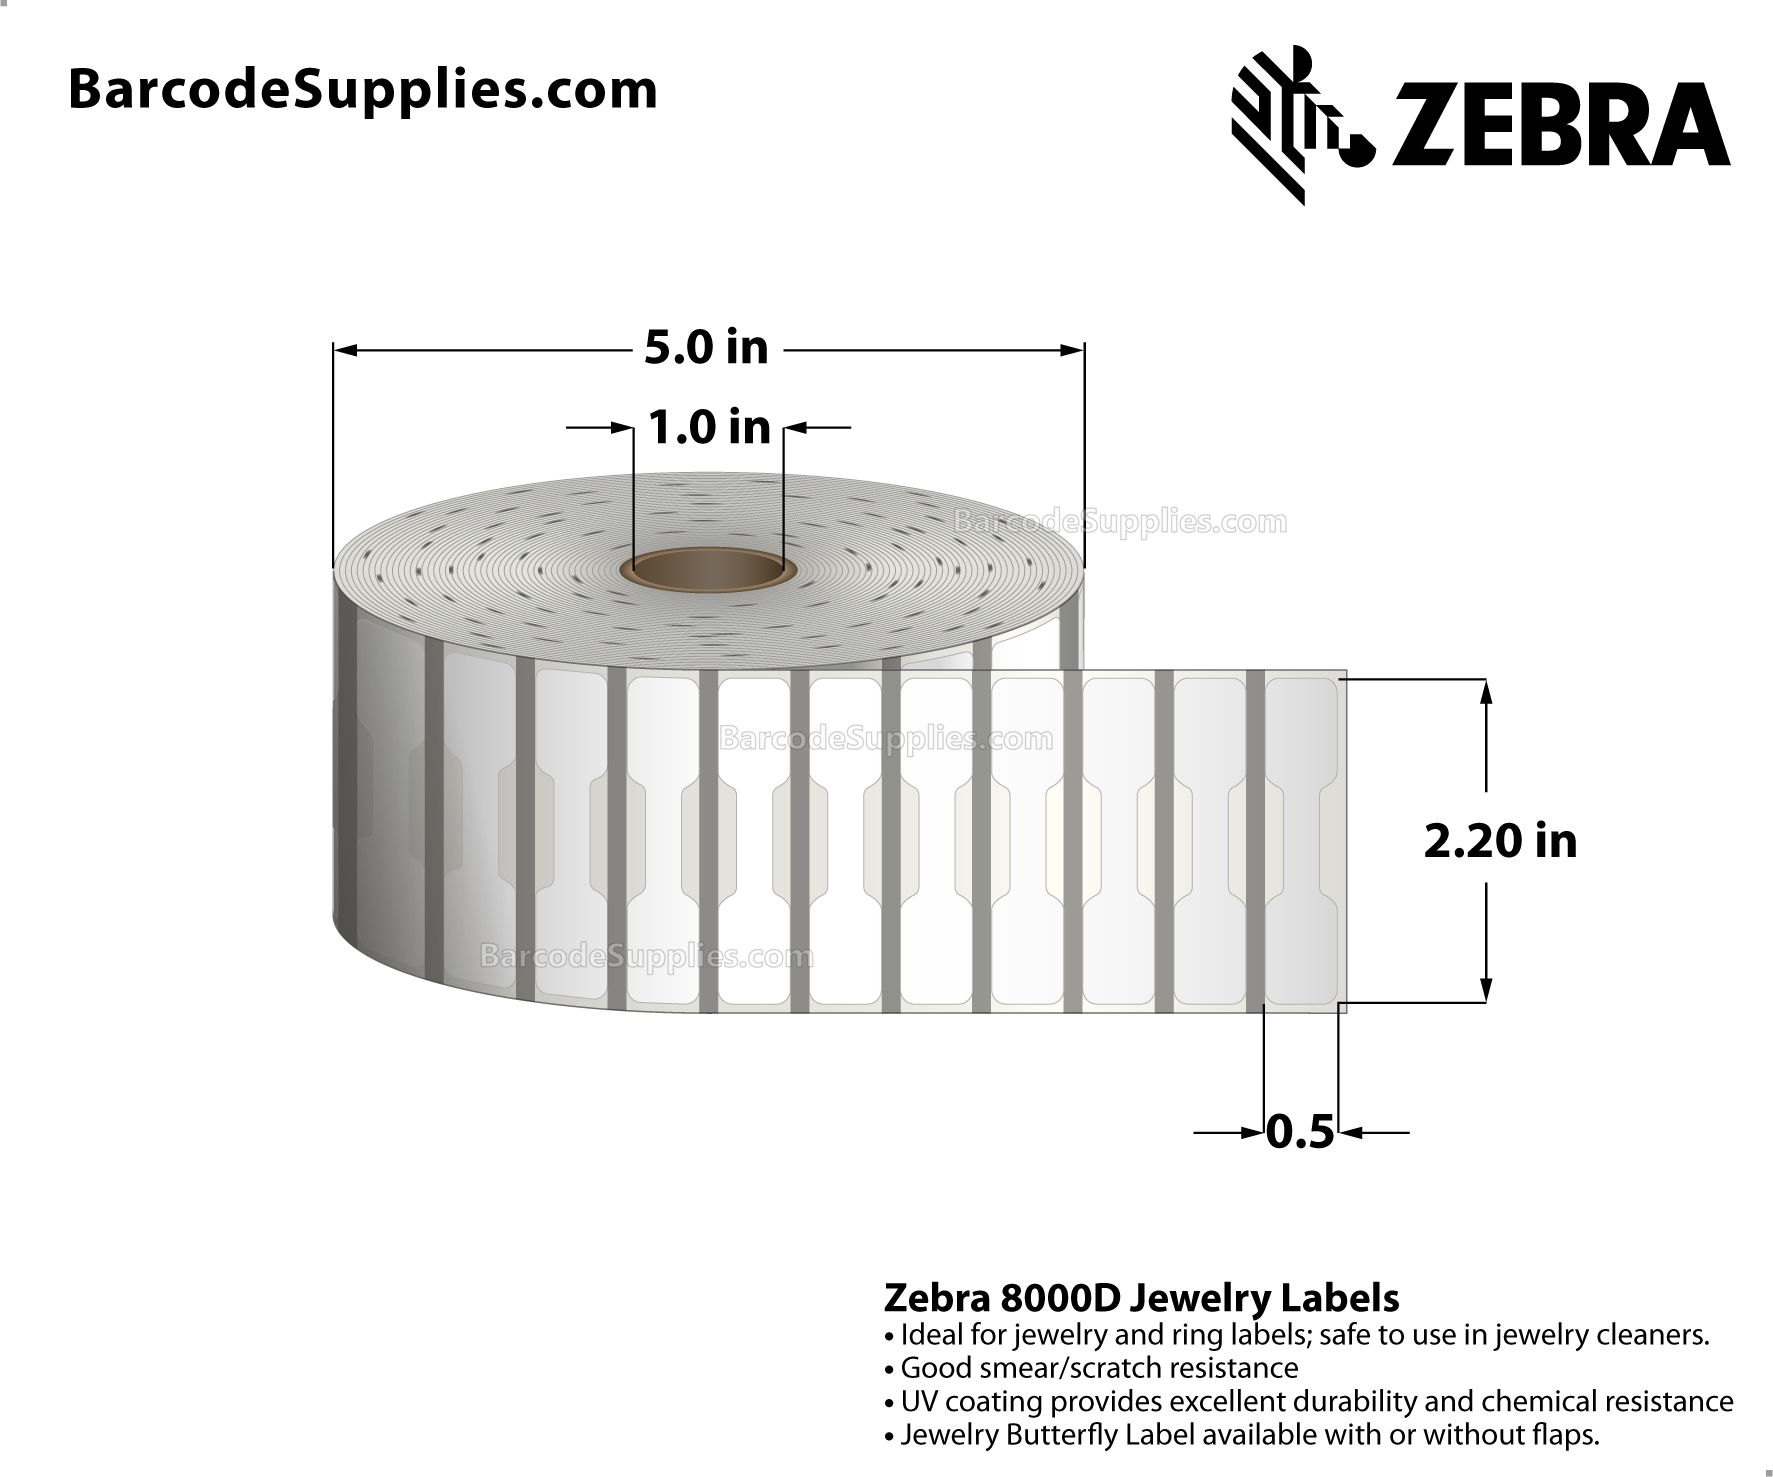 Zebra 2.20 x 0.50 Direct Thermal Labels 8000D Jewelry (Jewelry Butterfly  Label w/o flaps) 1